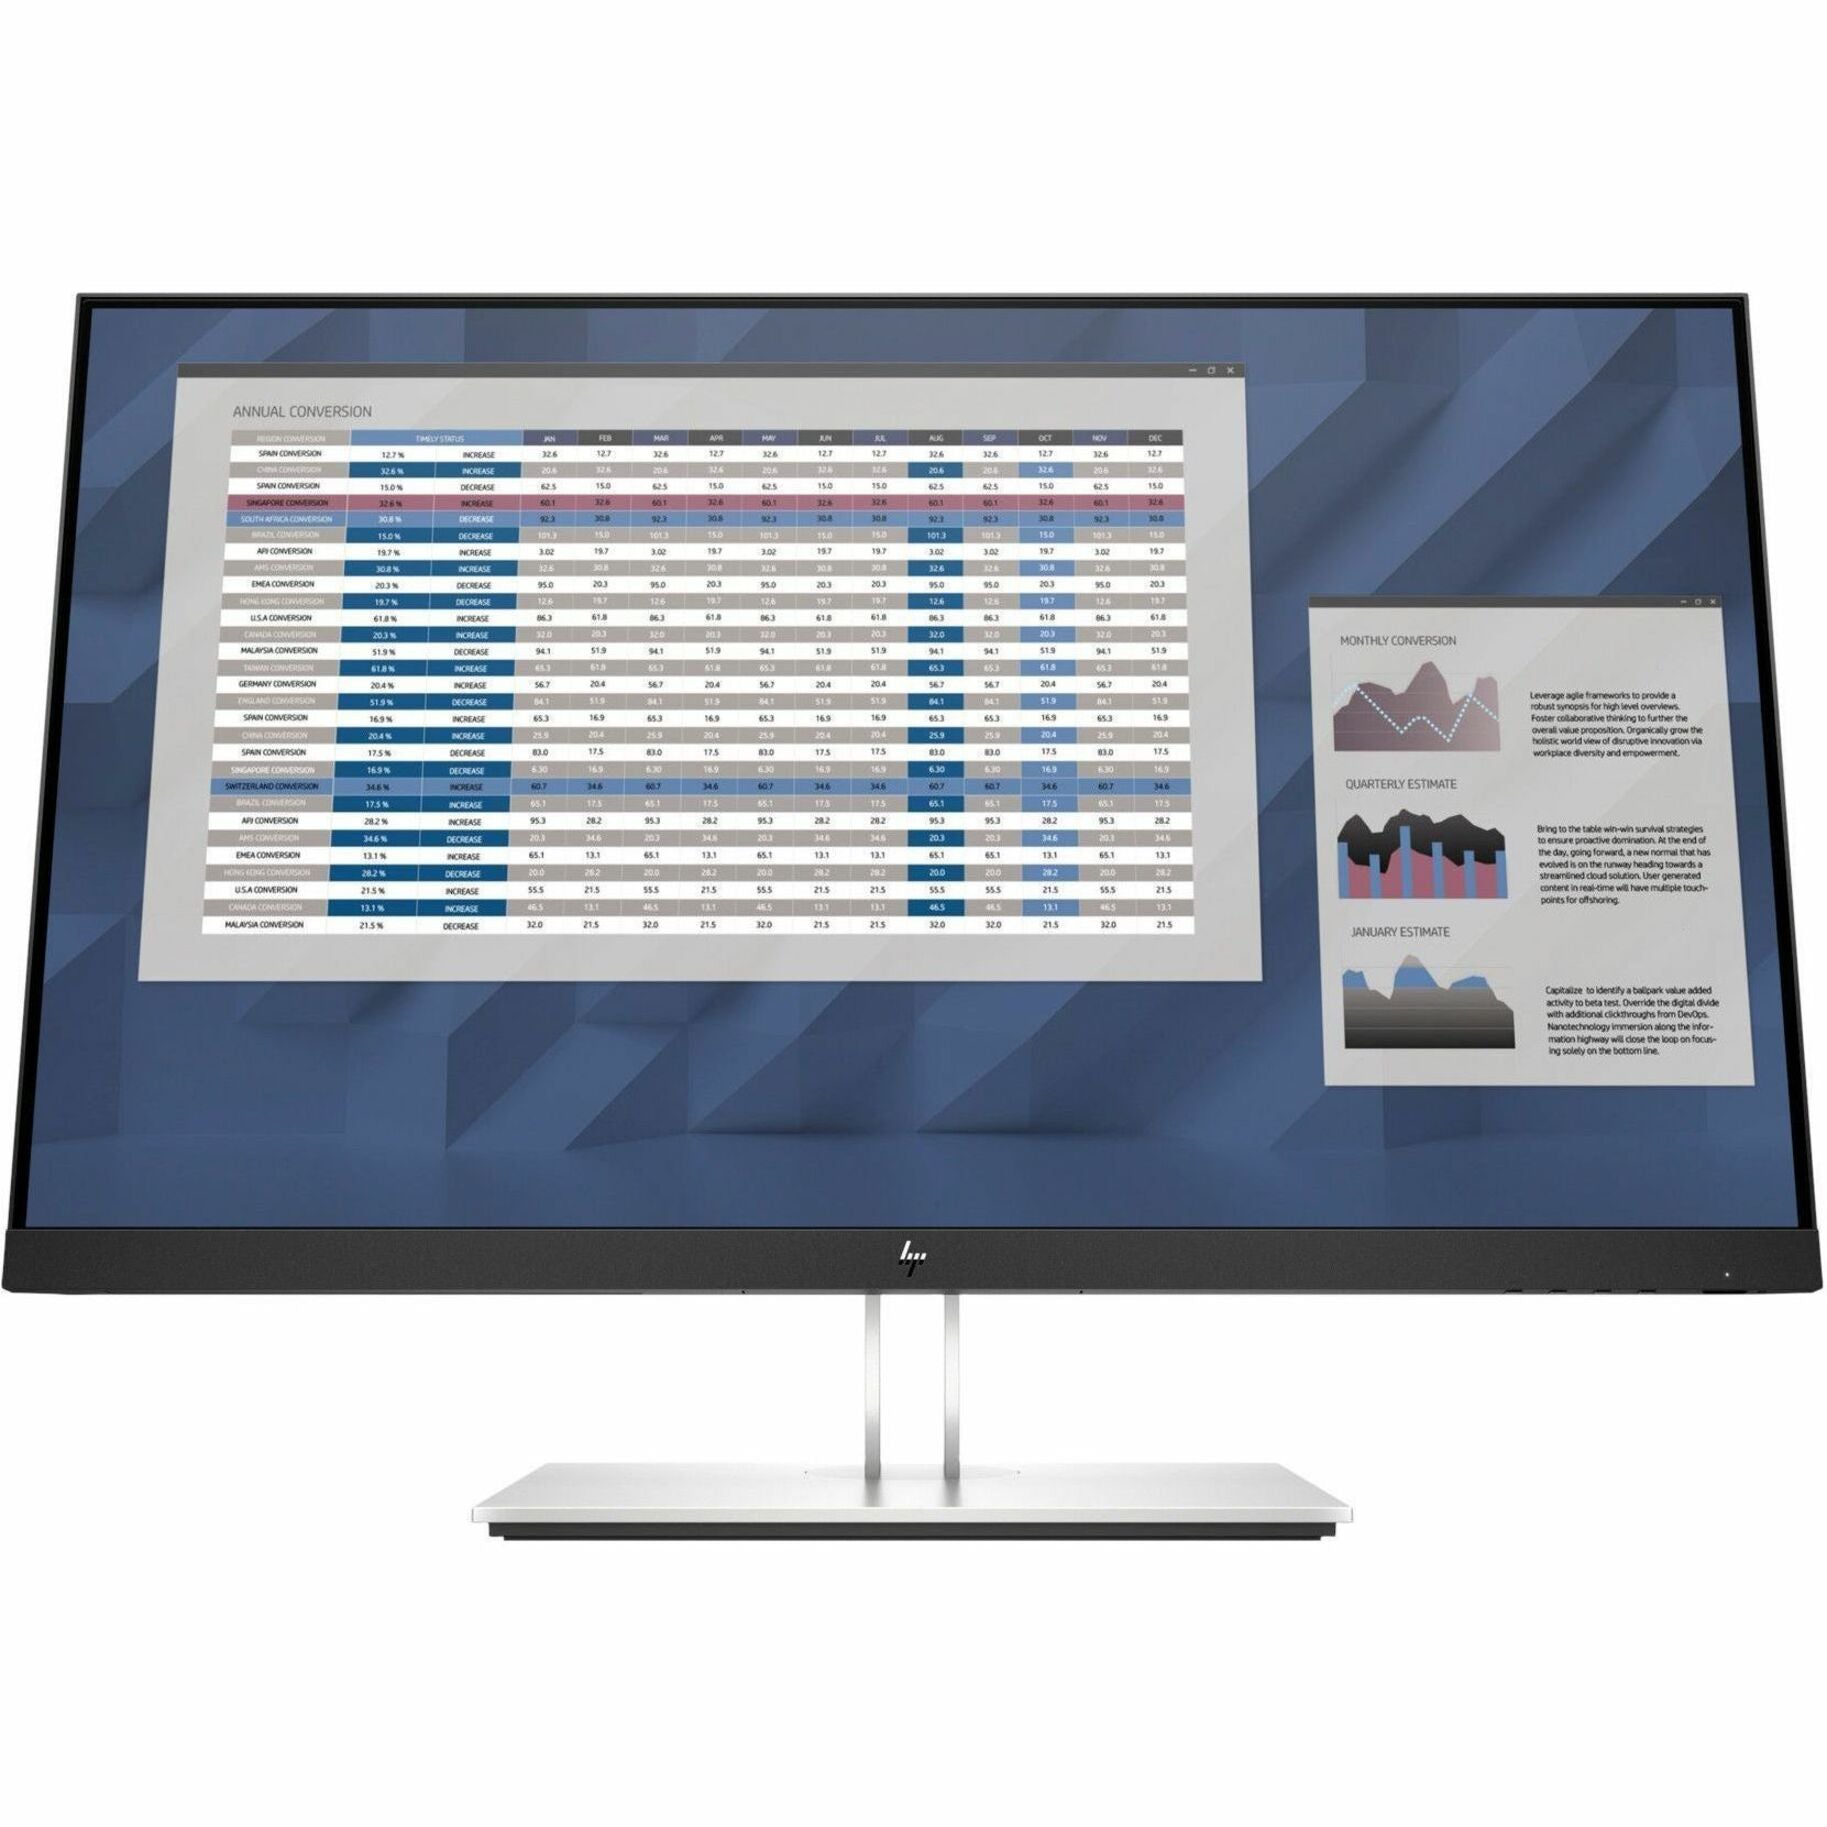 HPI SOURCING - NEW E27 G4 FHD Monitor, 27" Full HD LCD, 16:9, Black